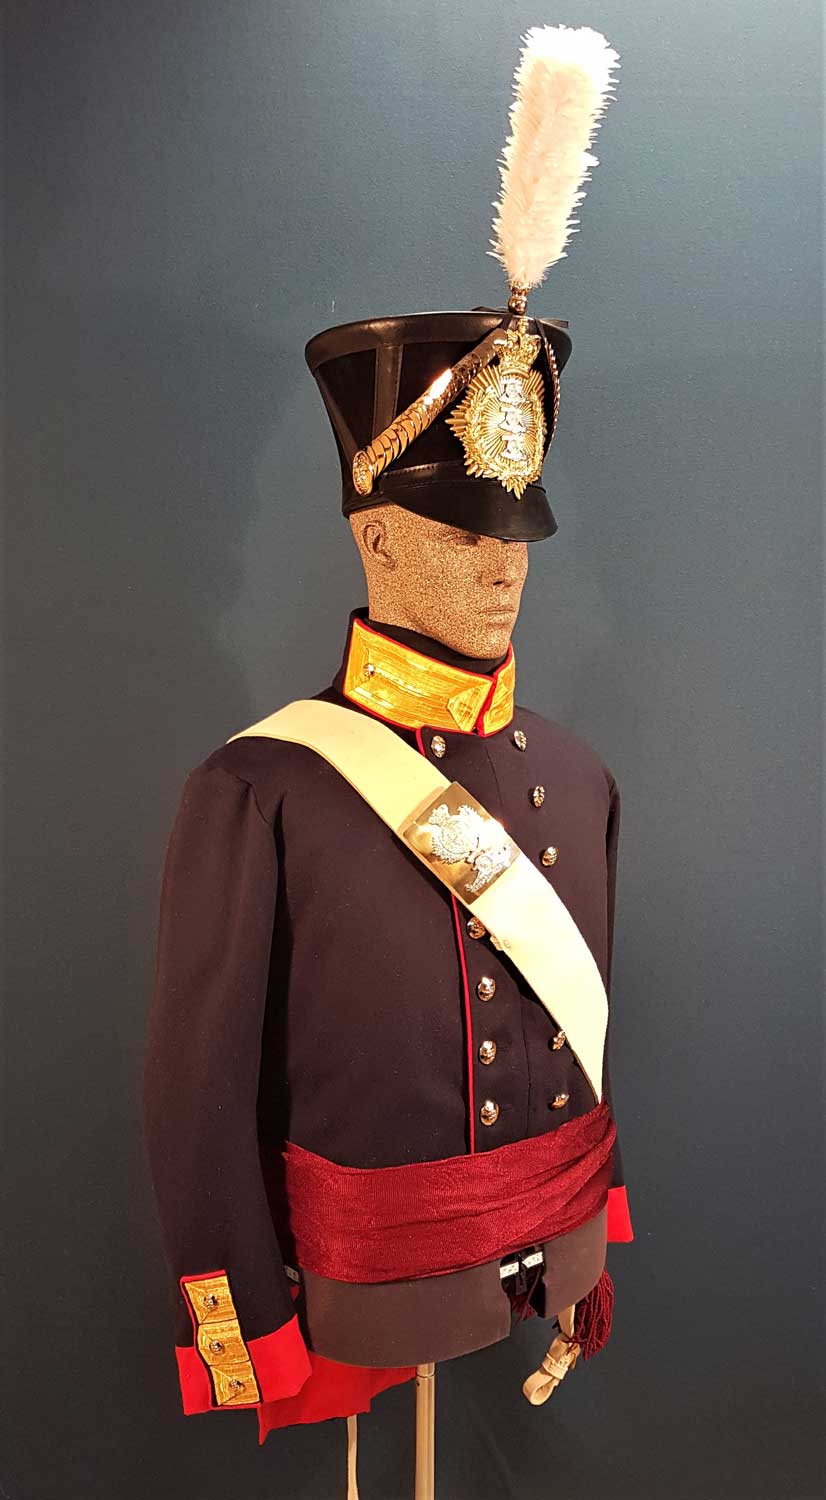 British, Royal Artillery Lieutenant, 1833